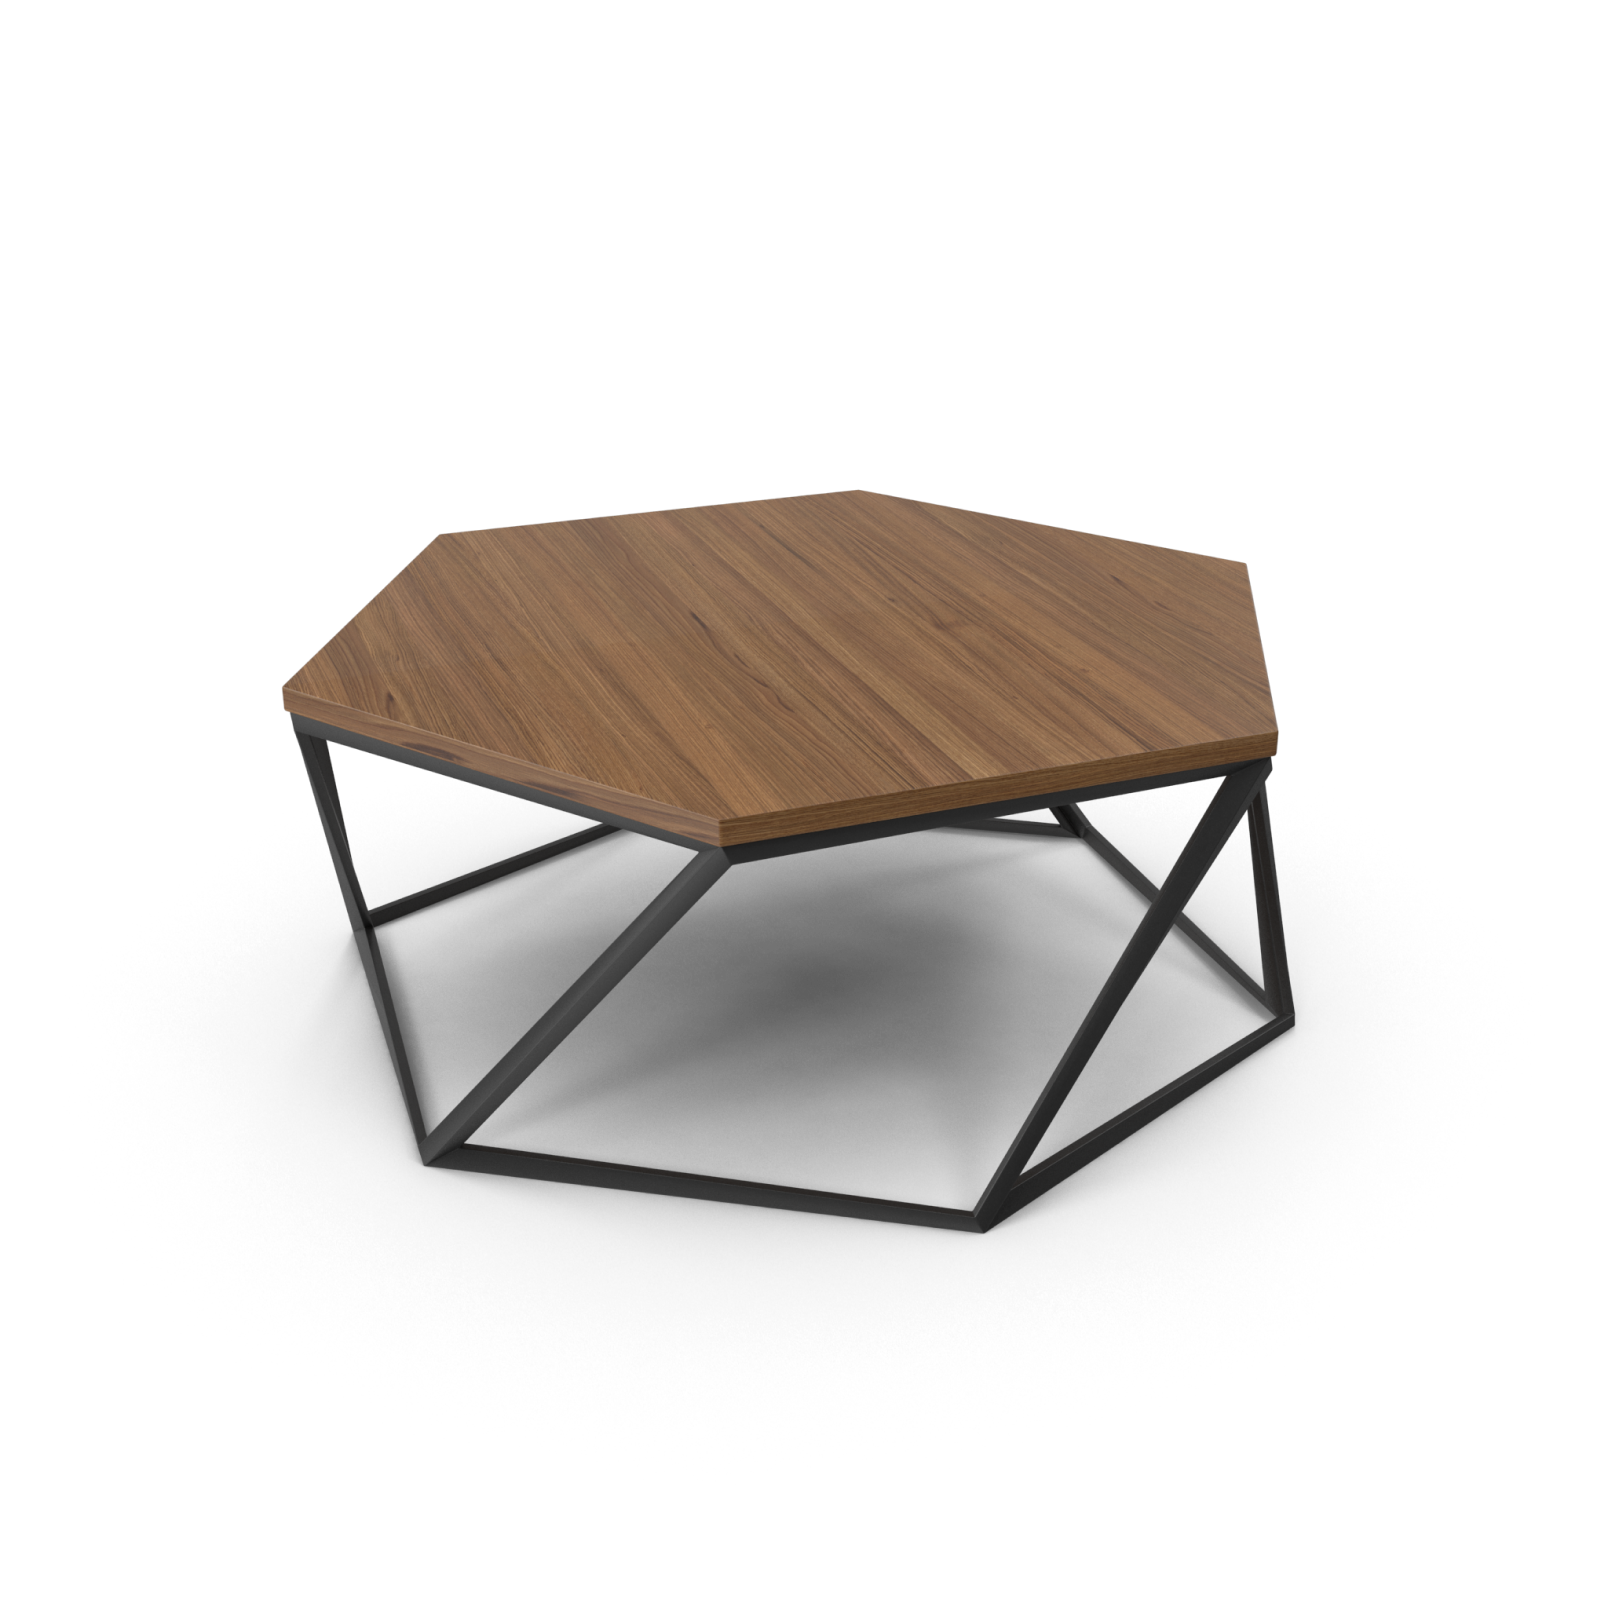 hexagonal table 